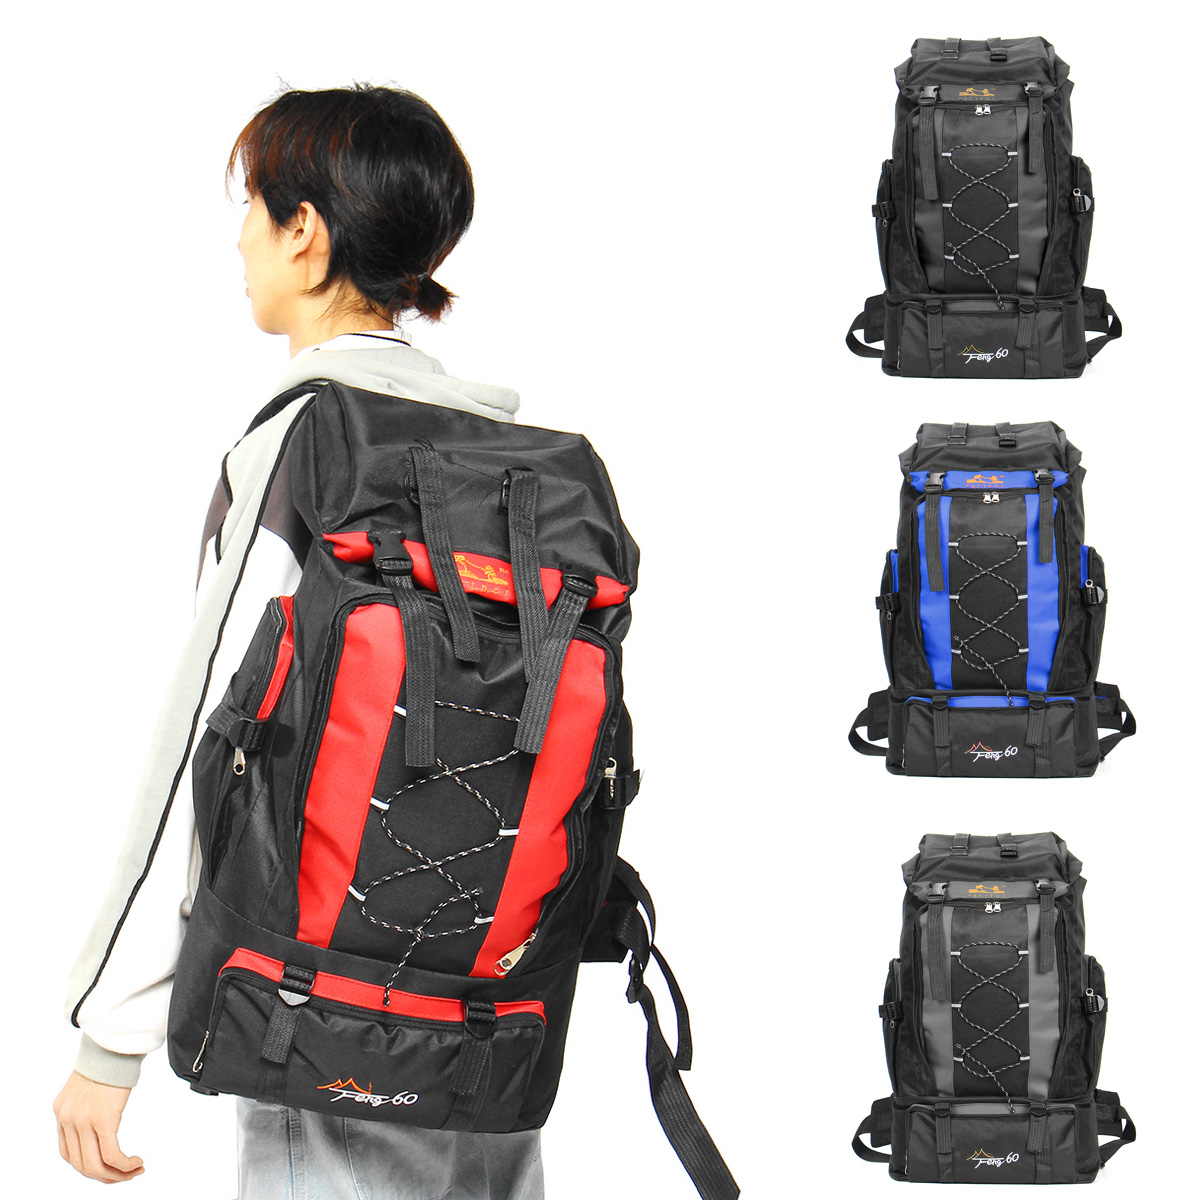 

60L Outdoor Sport Hiking Camping Rucksack Bag Luggage Travel Backpack Waterproof